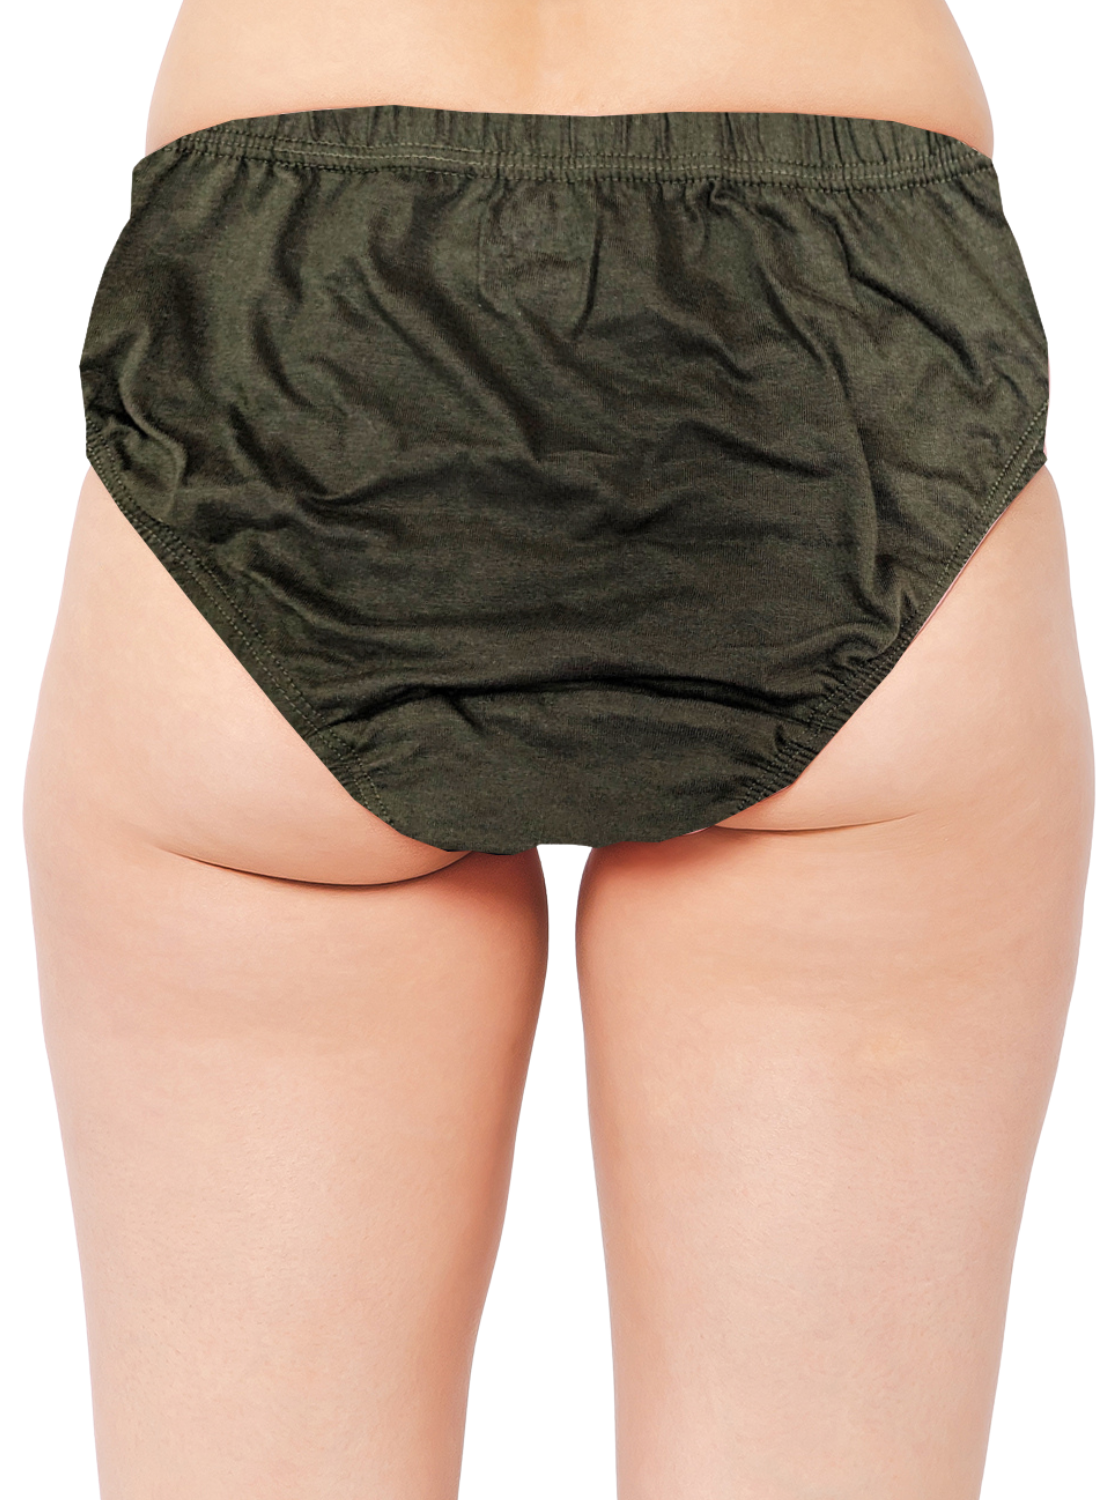 AUSM Premium Cotton Panty - Superior Quality | Comfort Elastic Type | Beautiful Plain Panties